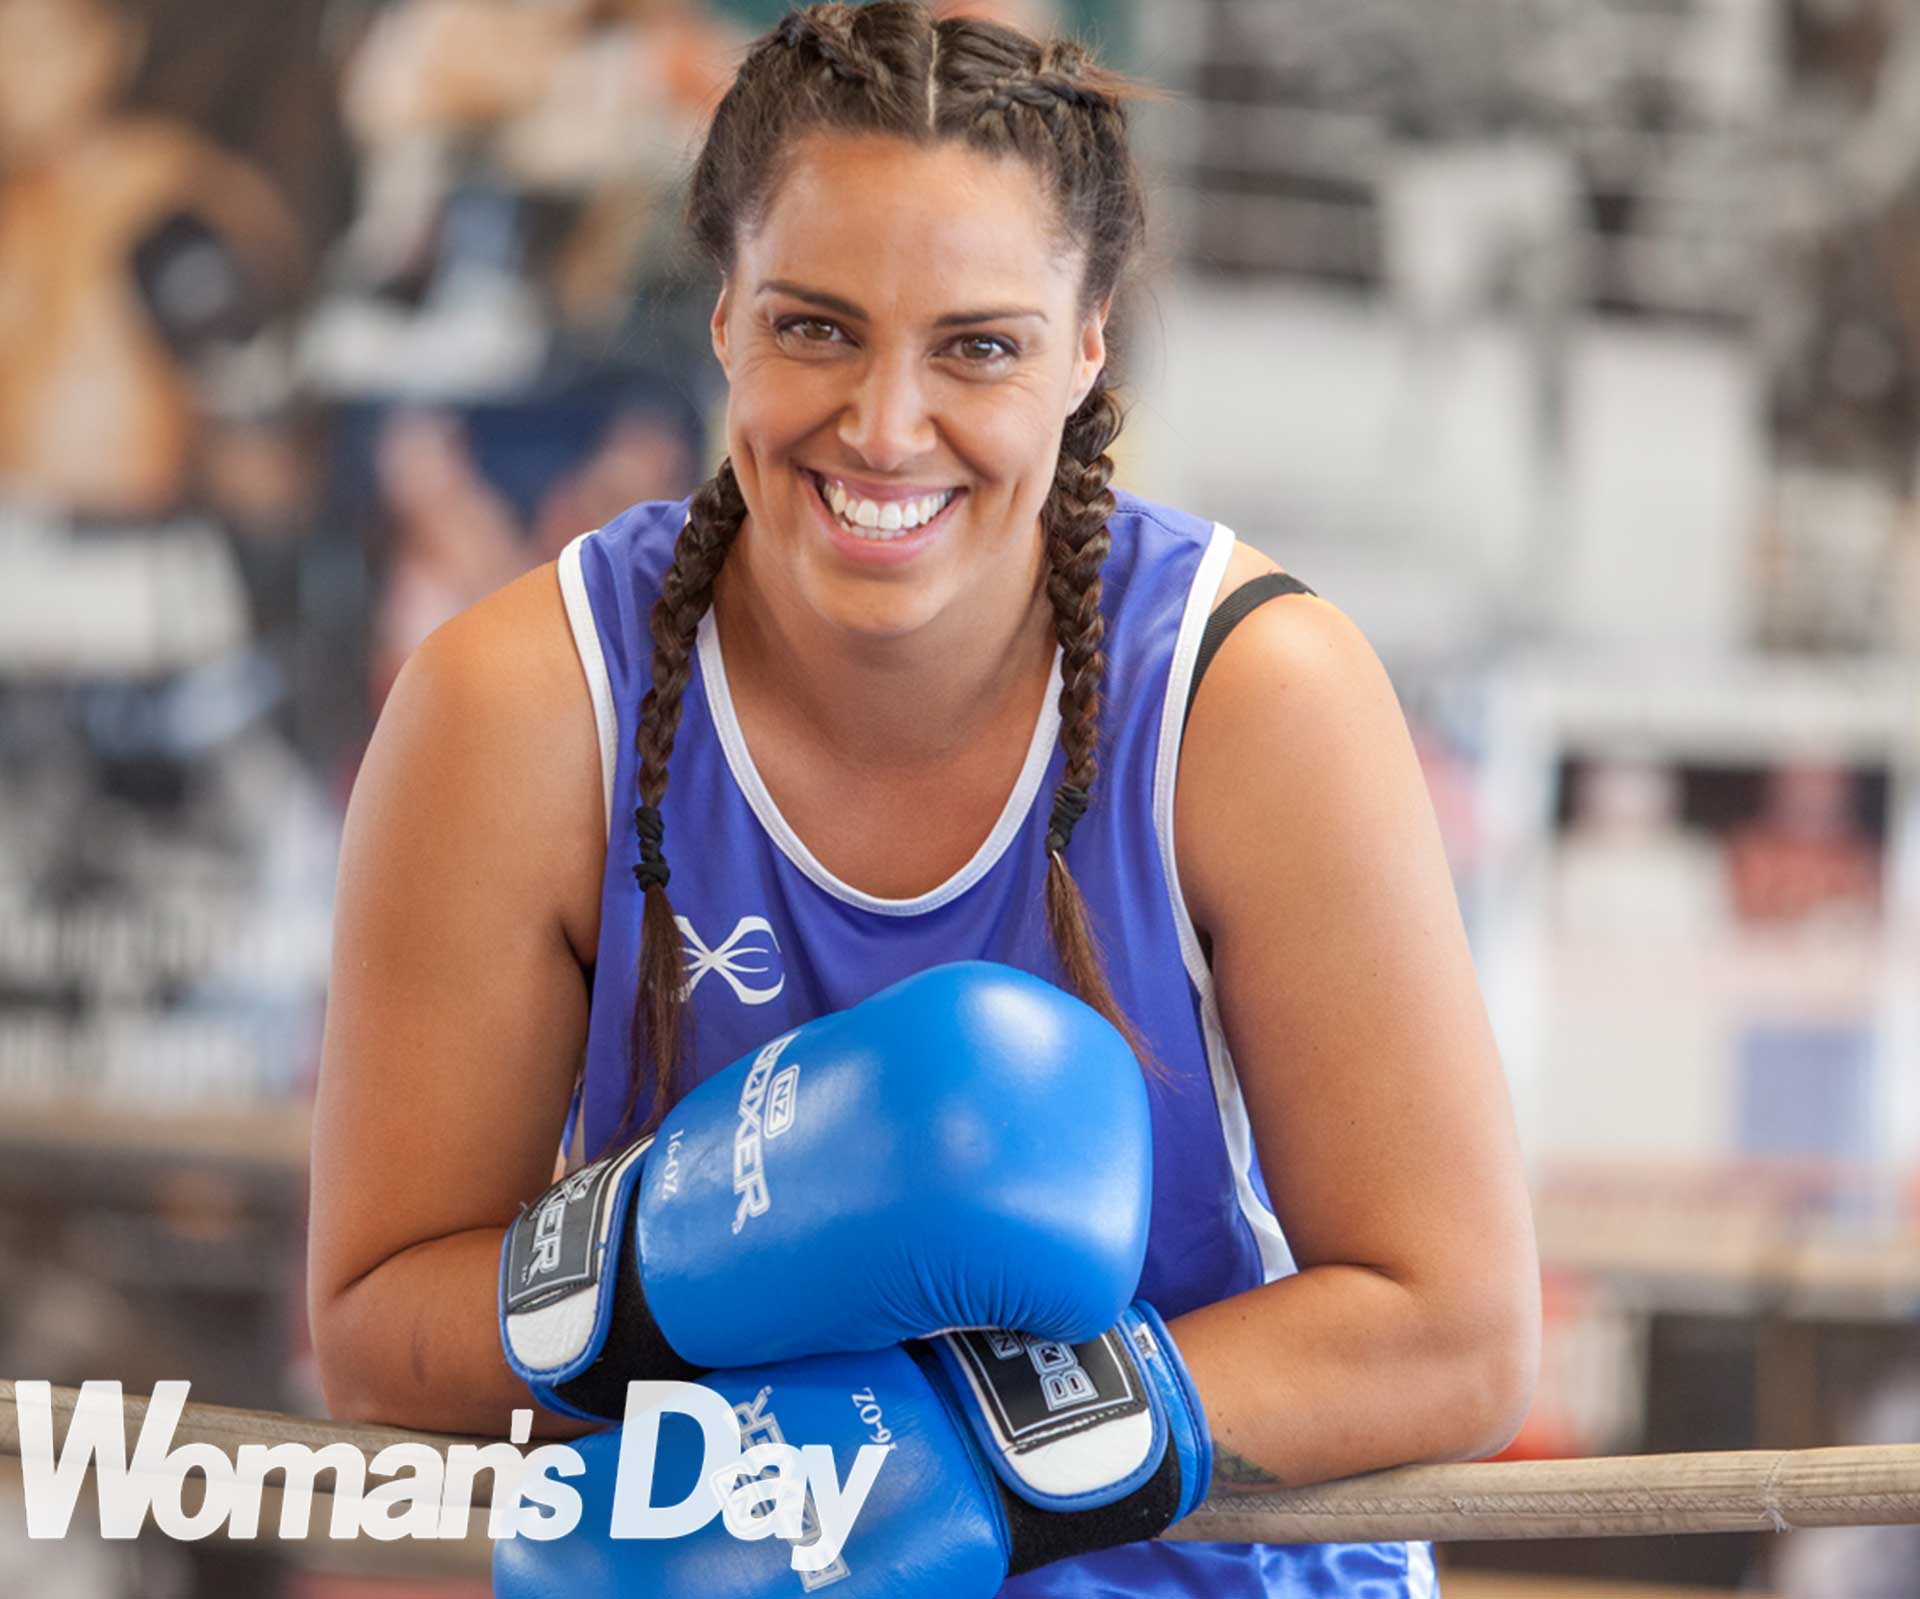 MKR NZ runner-up Heather Freeman’s life transformation